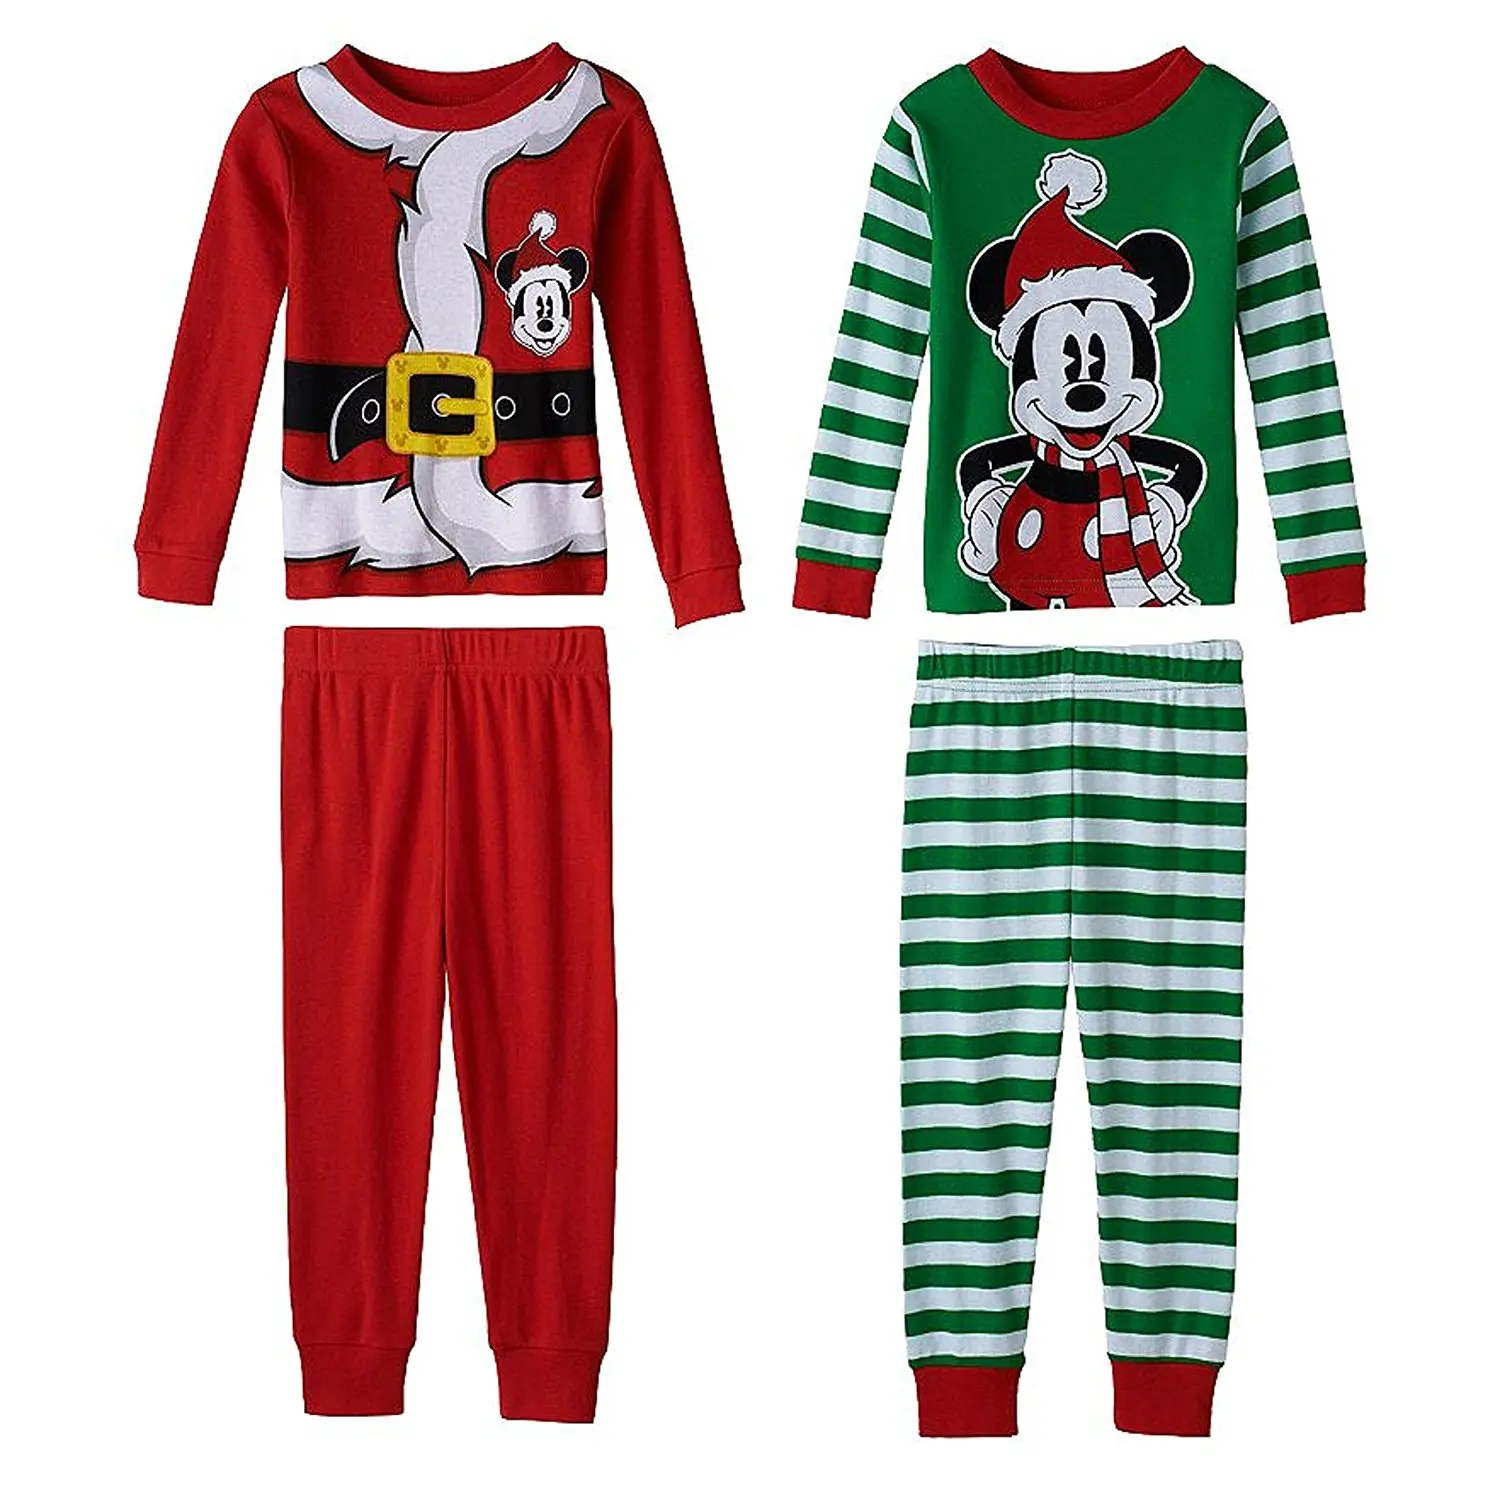 Cheap 4t Pajamas Boys, find 4t Pajamas Boys deals on line at Alibaba.com